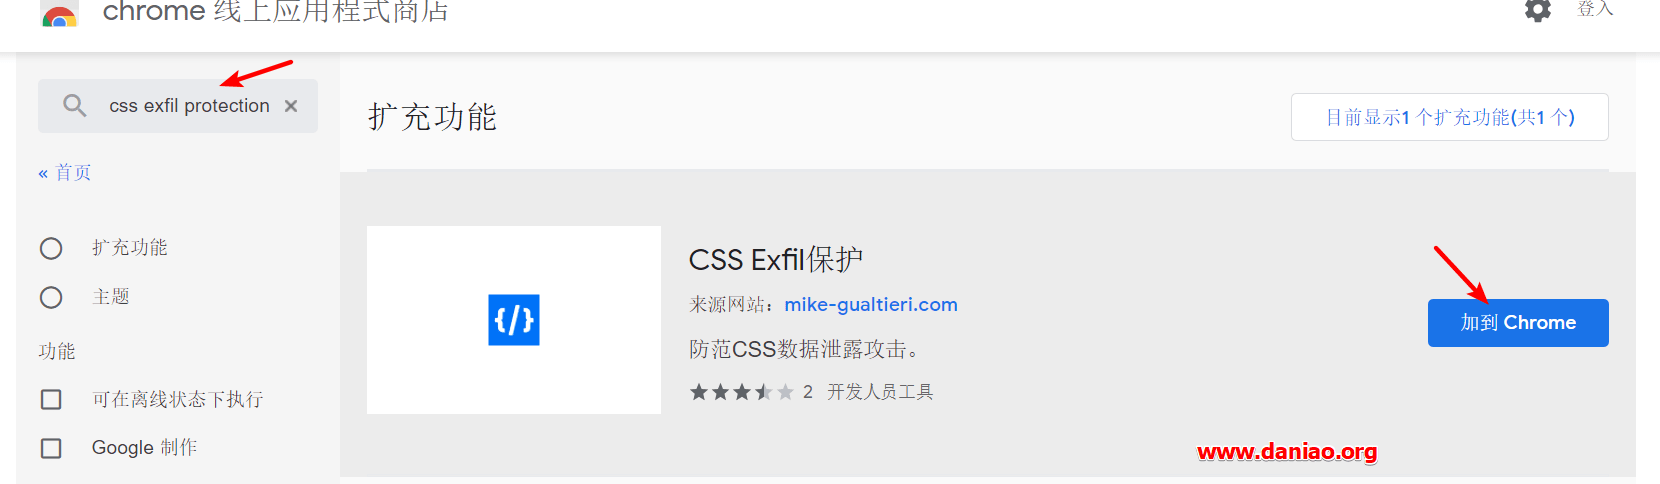 Chrome/Firefox安全插件-CSS Exfil Protection:阻隔CSS Exfil漏洞,防止密码泄露